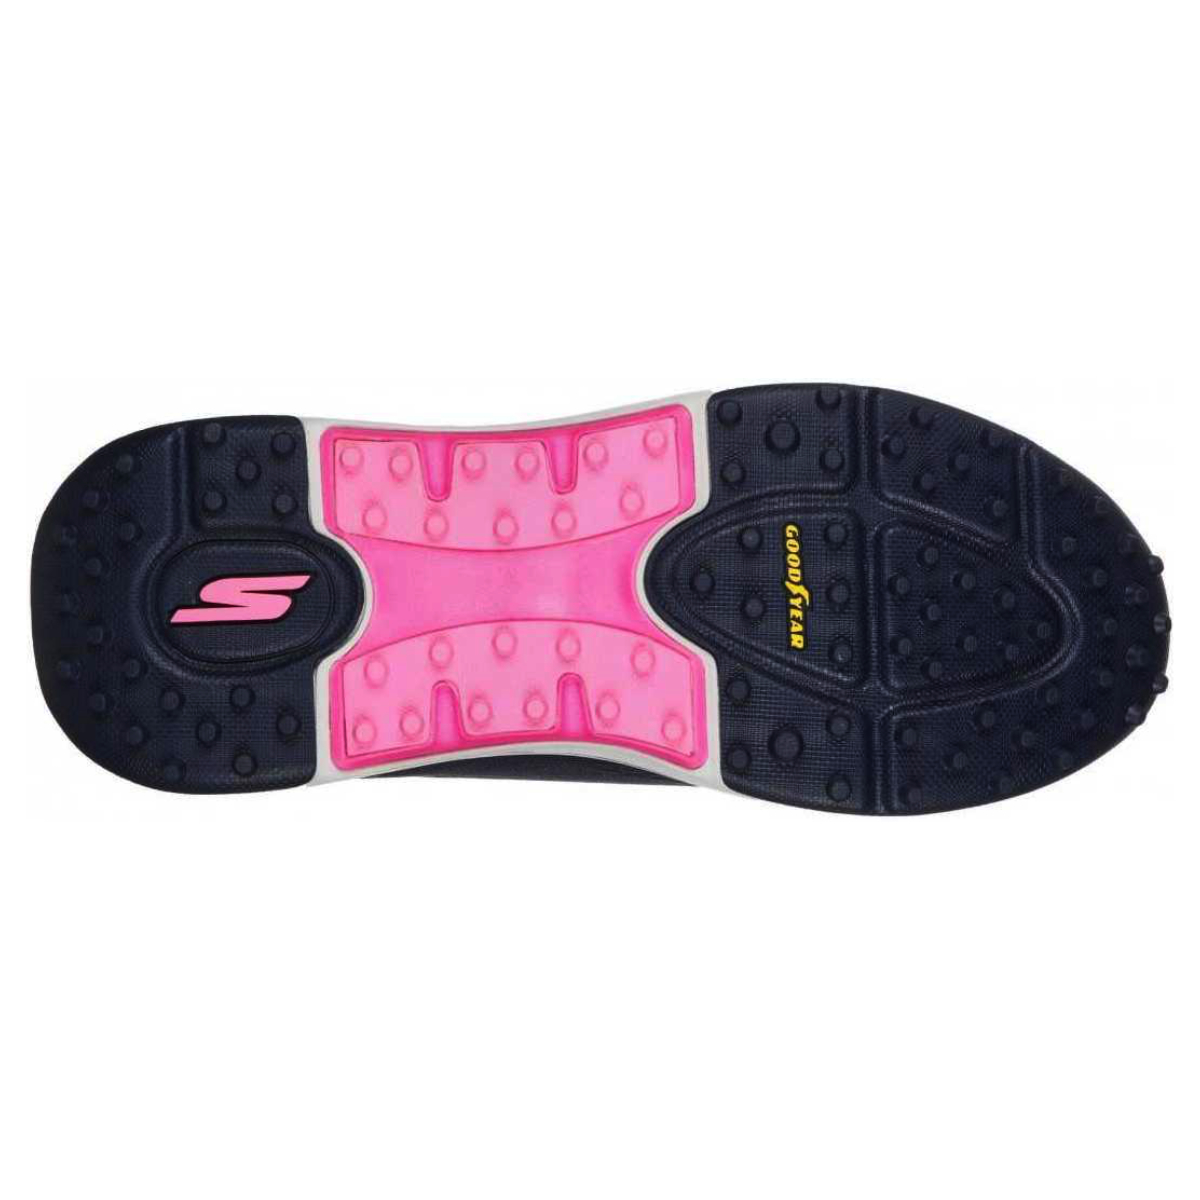 Skechers Arch Fit Balance Navy/Pink Damen